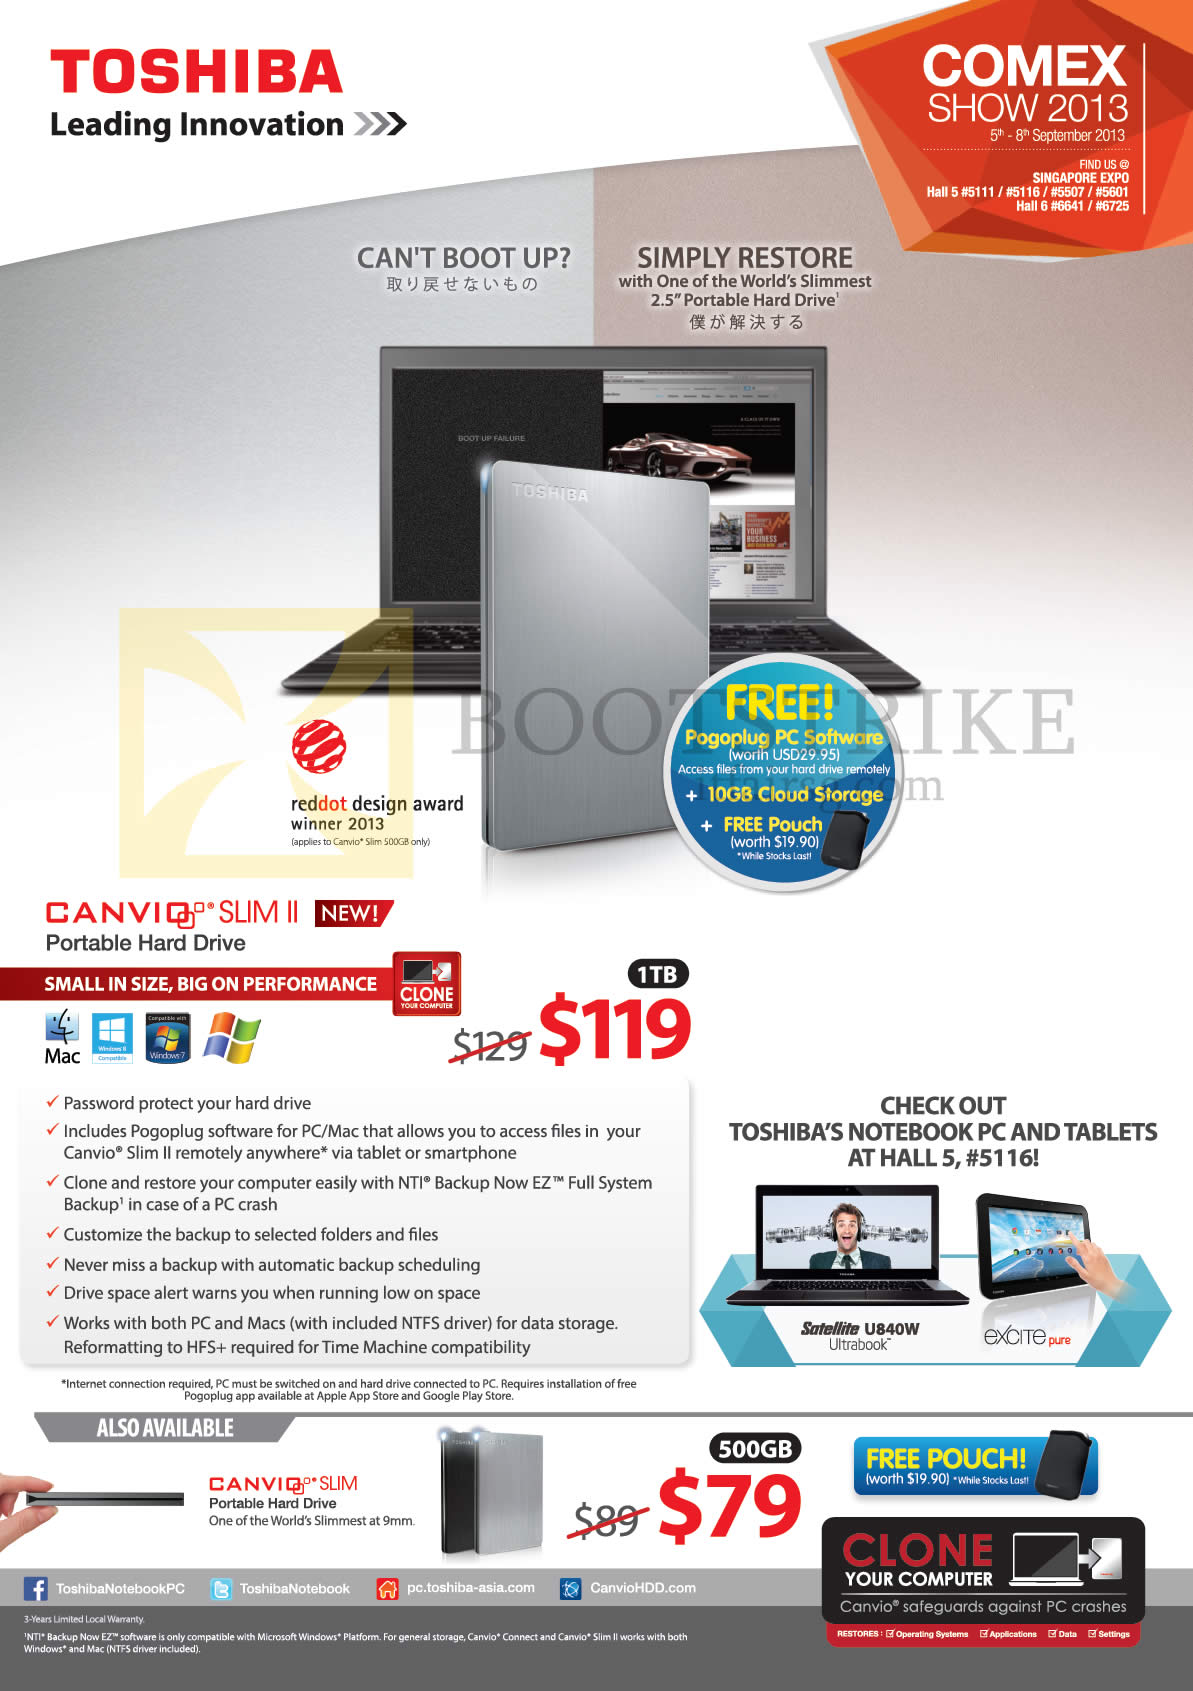 COMEX 2013 price list image brochure of Toshiba External Storage Canvio SLIM II